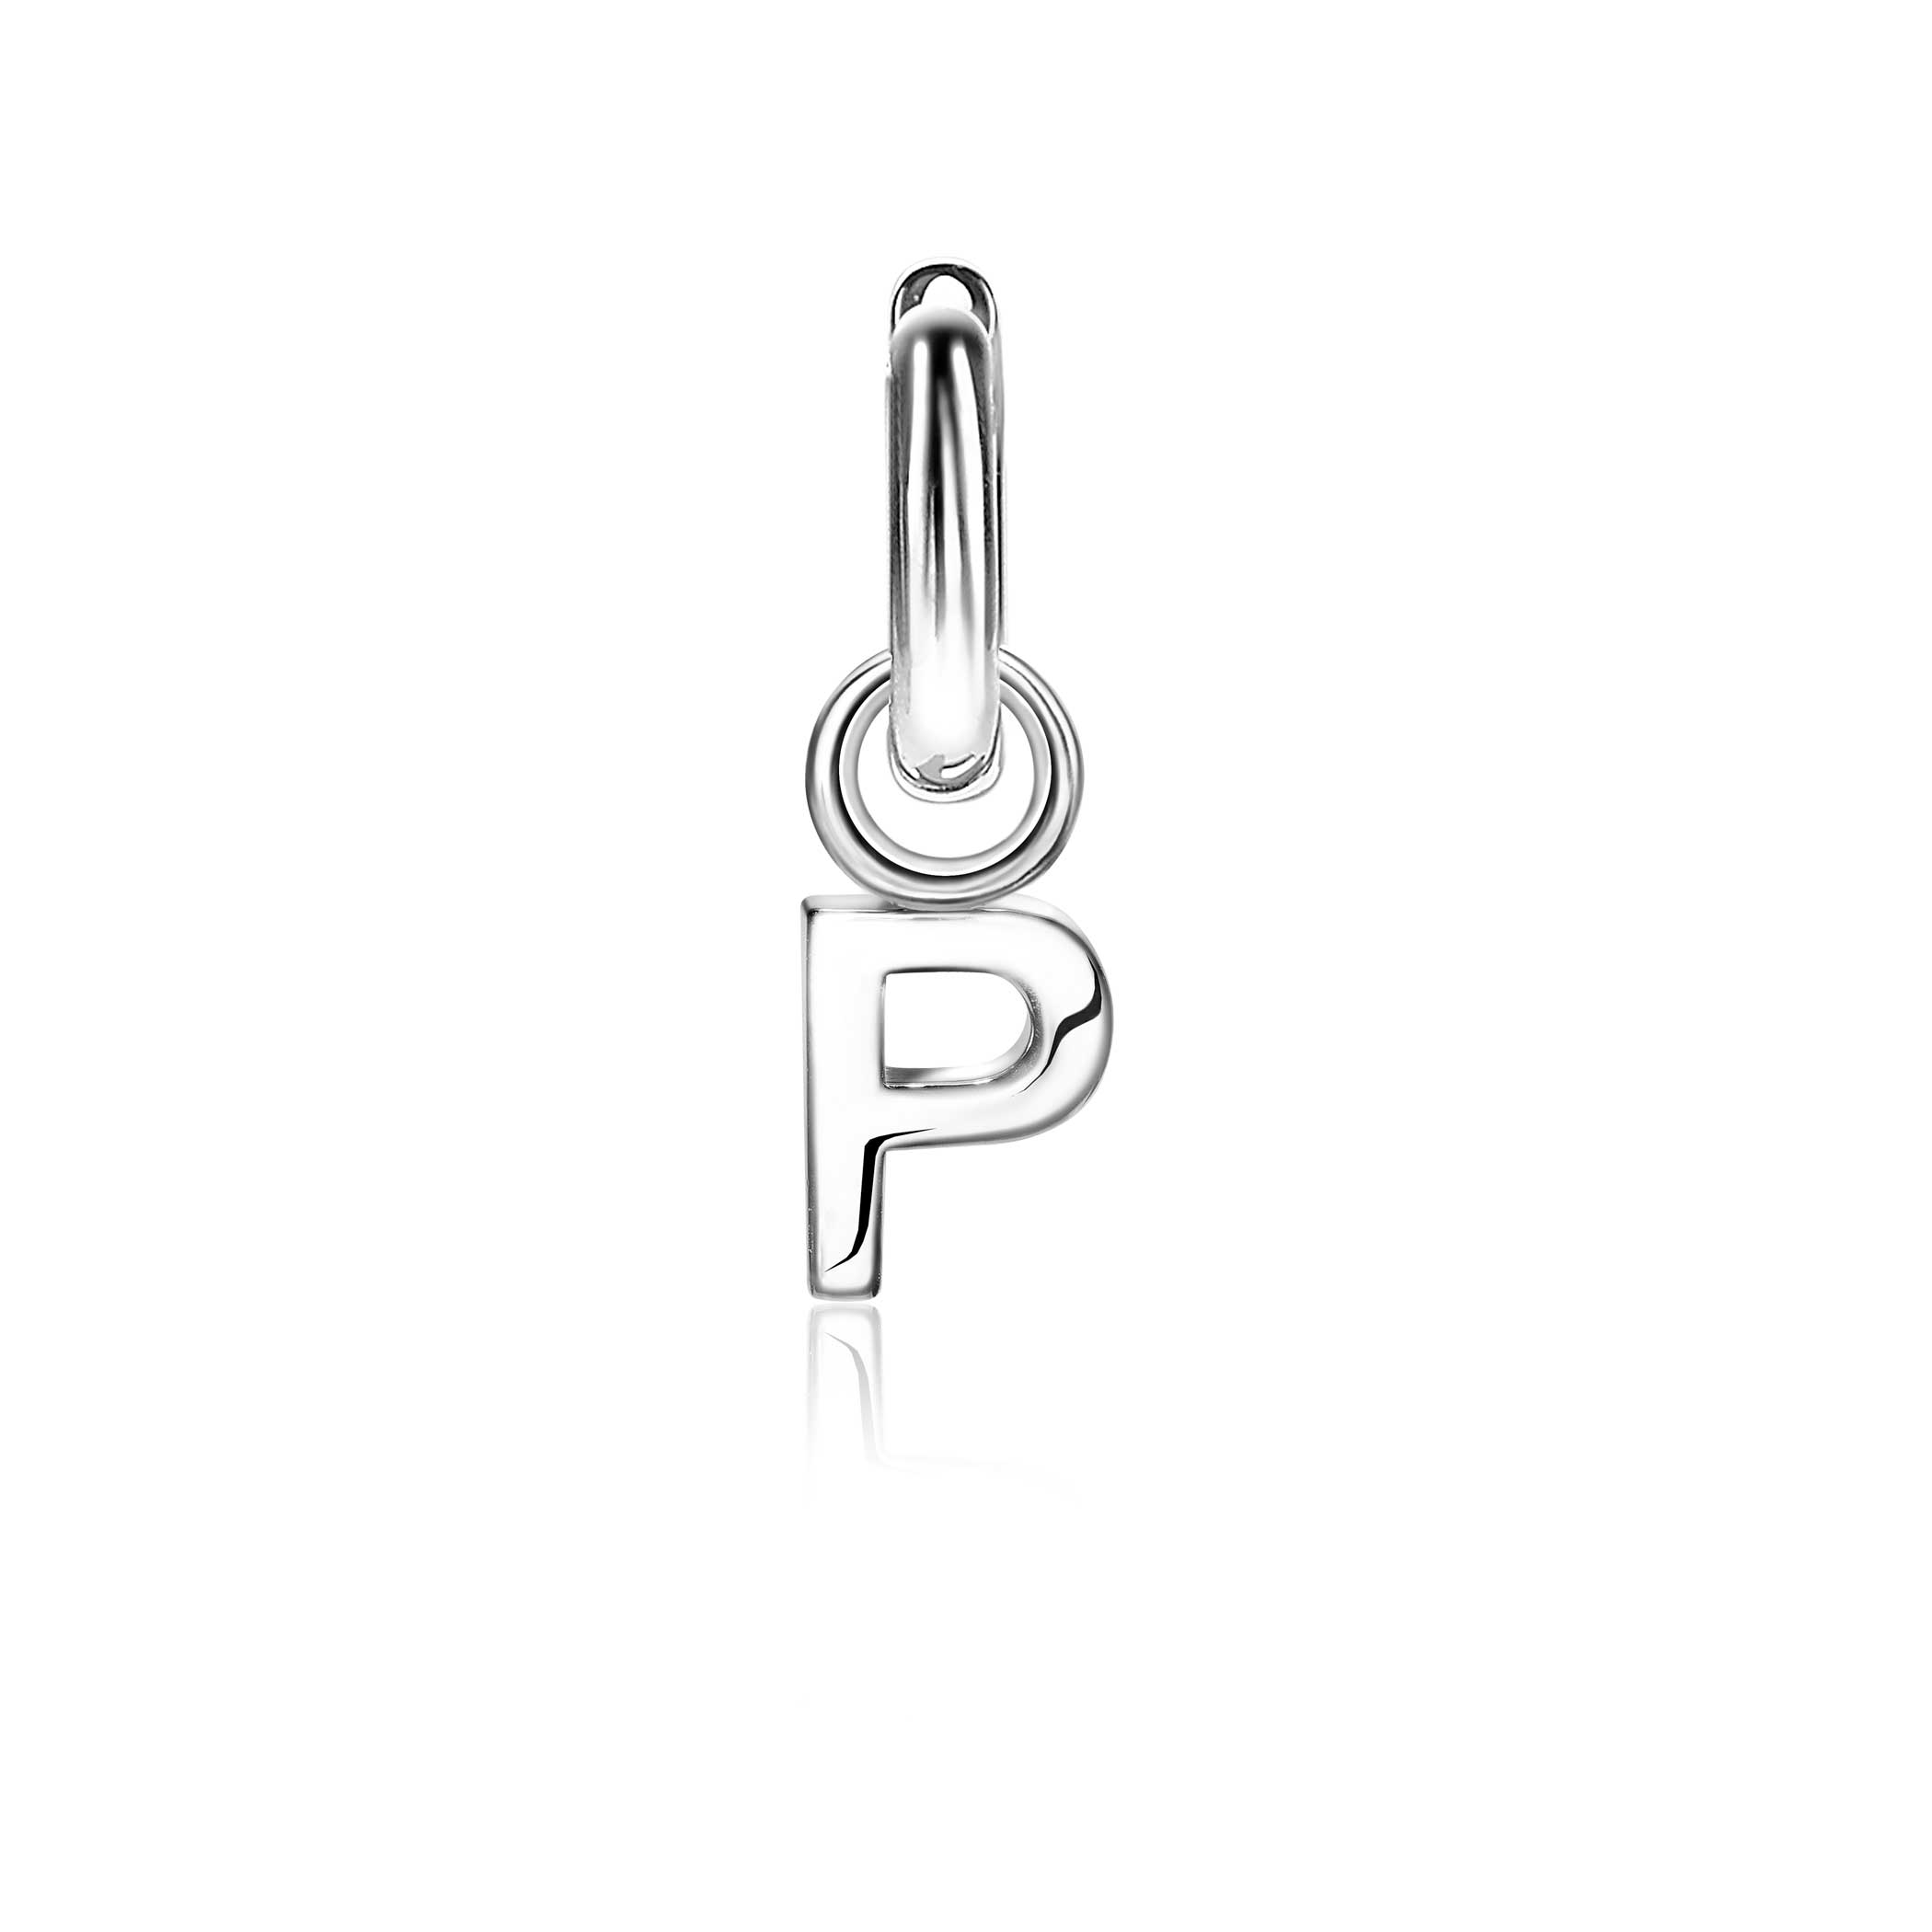 ZINZI Sterling Silver Letter Earrings Pendant P price per piece ZICH2144P (excl. hoop earrings)